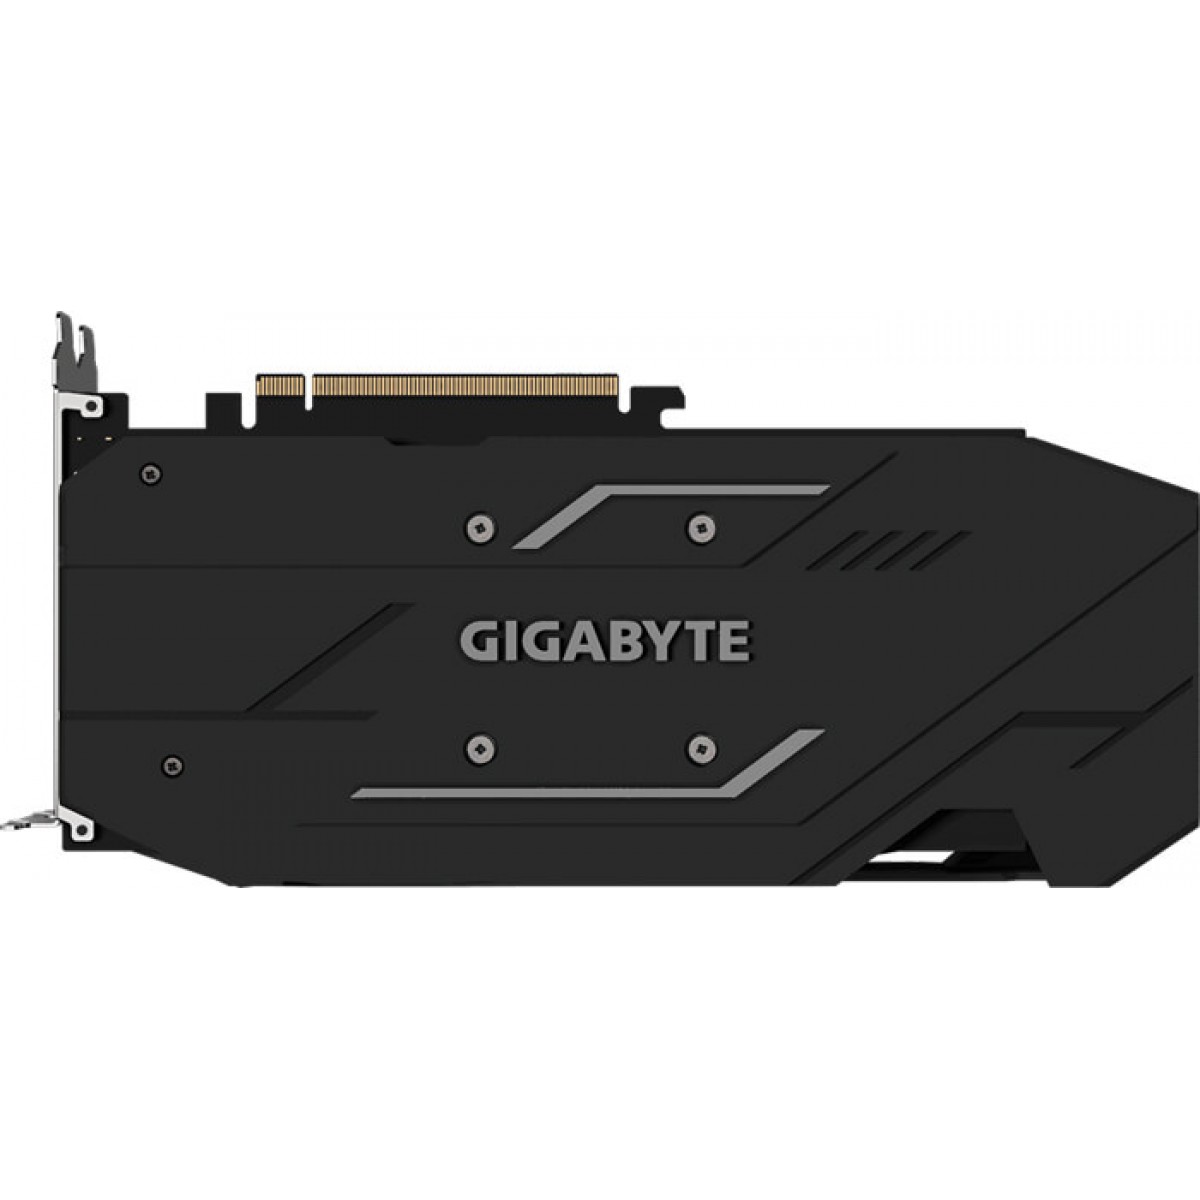 Placa de Vídeo Gigabyte Geforce RTX 2070 Winforce 2x, 8GB GDDR6, 256Bit